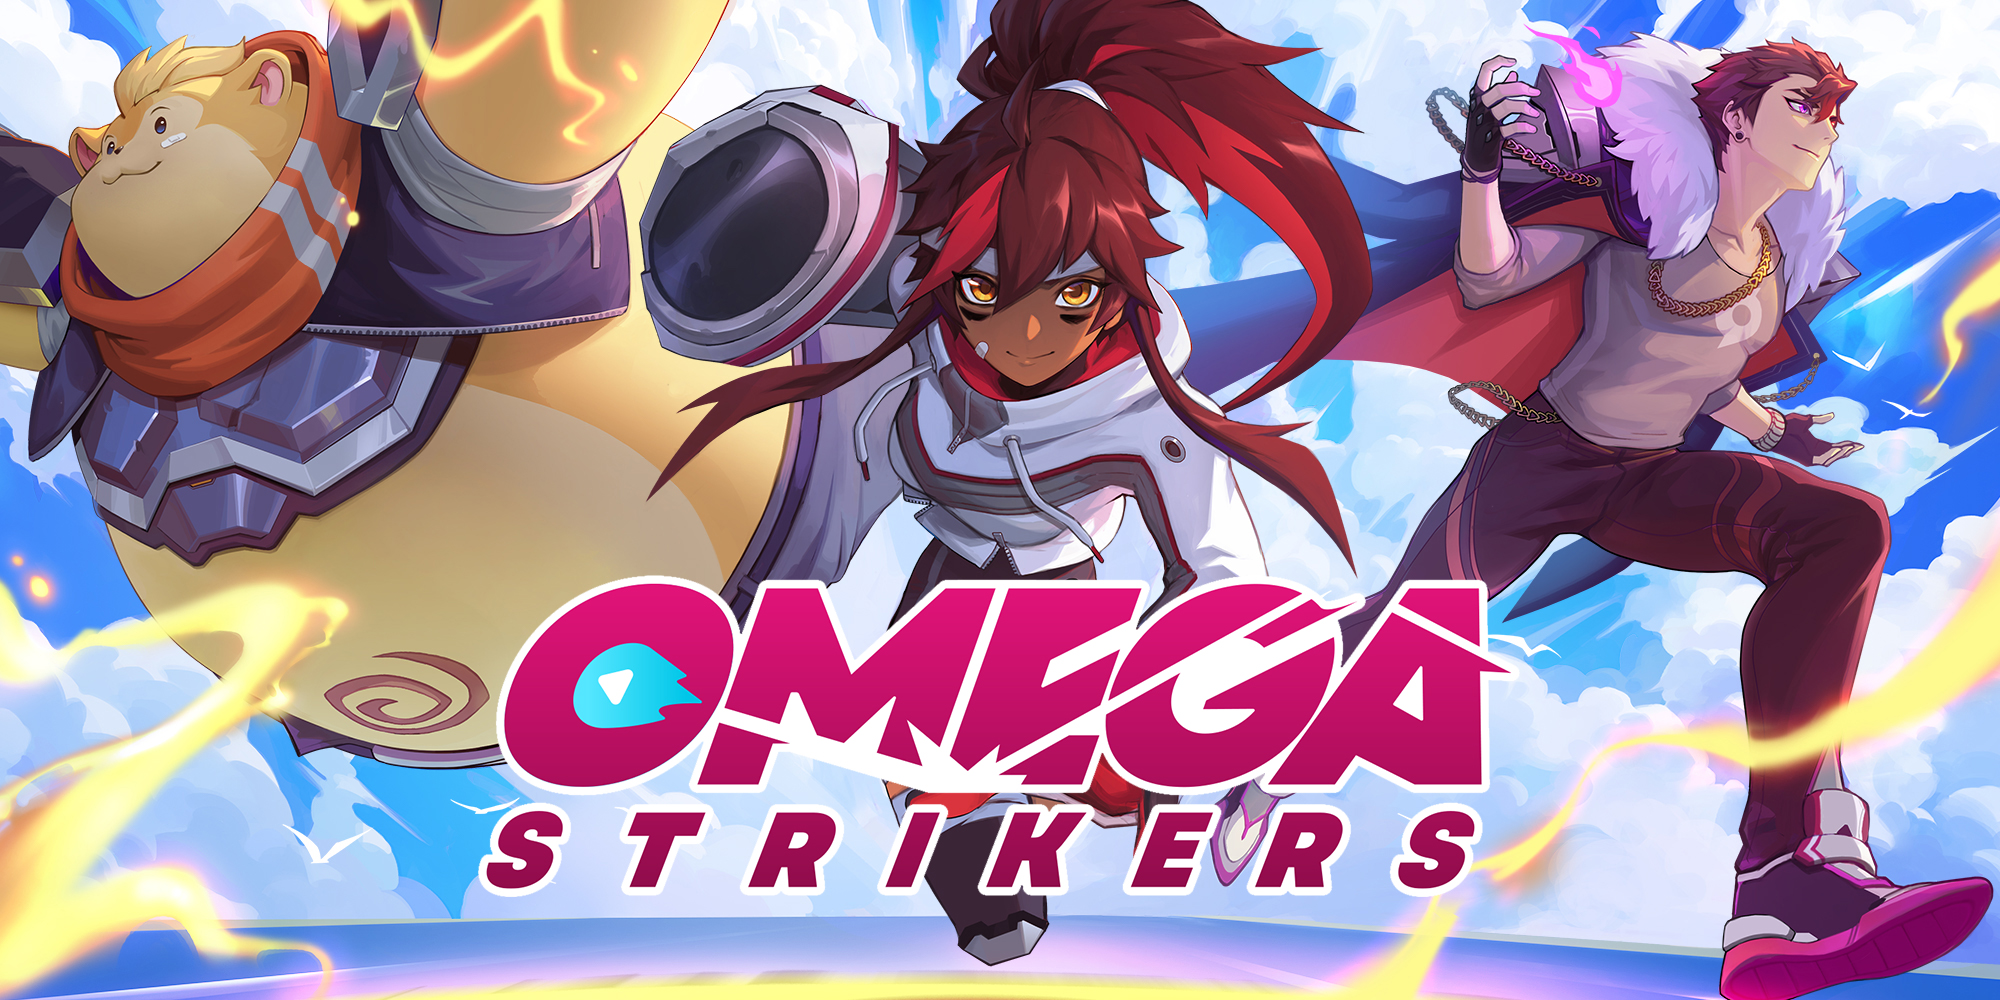 Omega Strike for Nintendo Switch - Nintendo Official Site